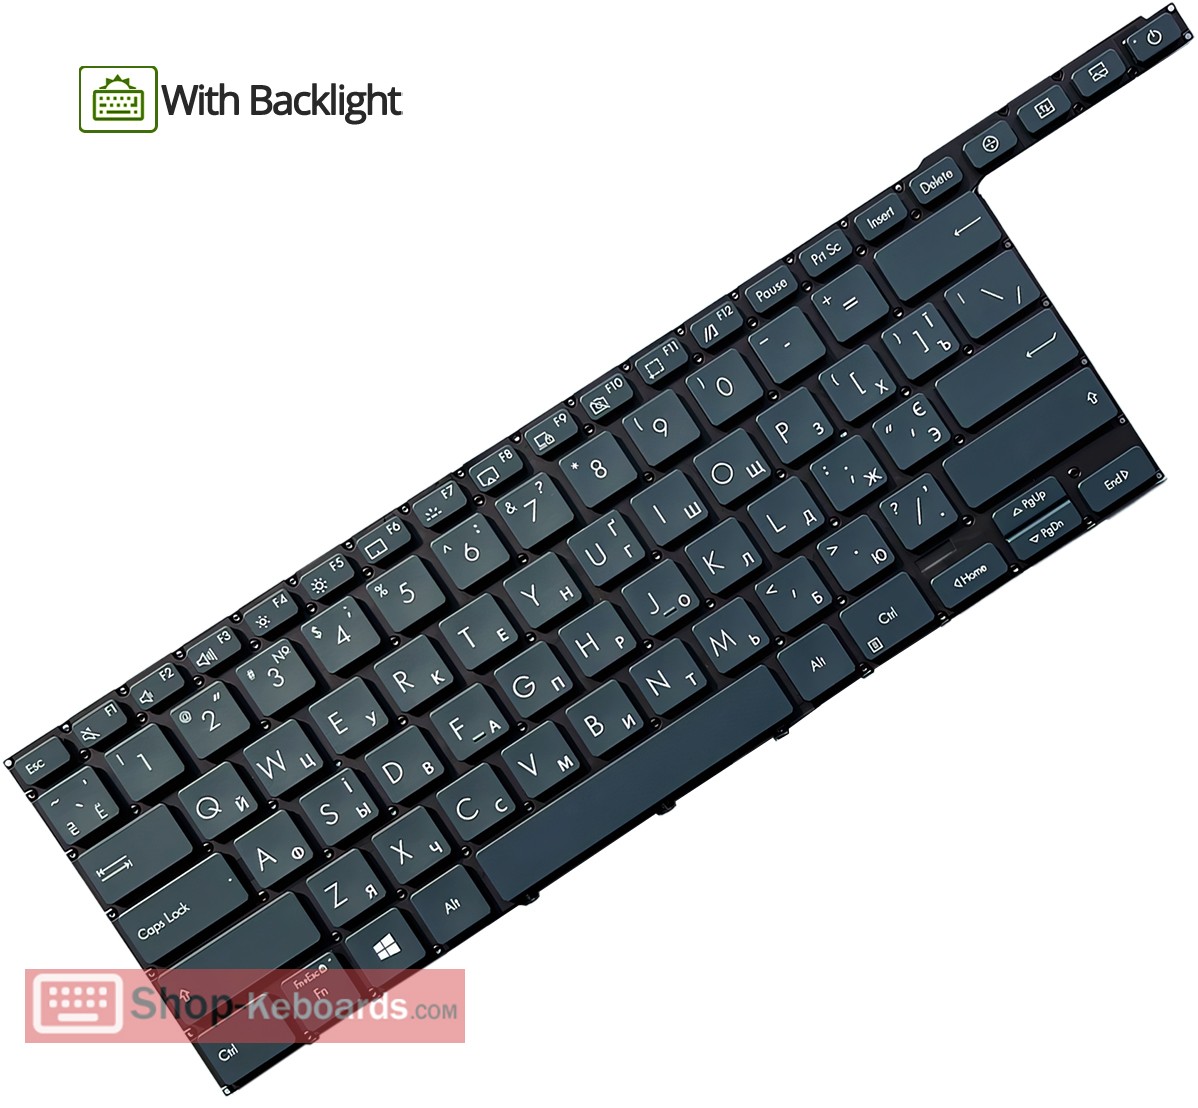 Asus 0KNB0-6823UI00  Keyboard replacement